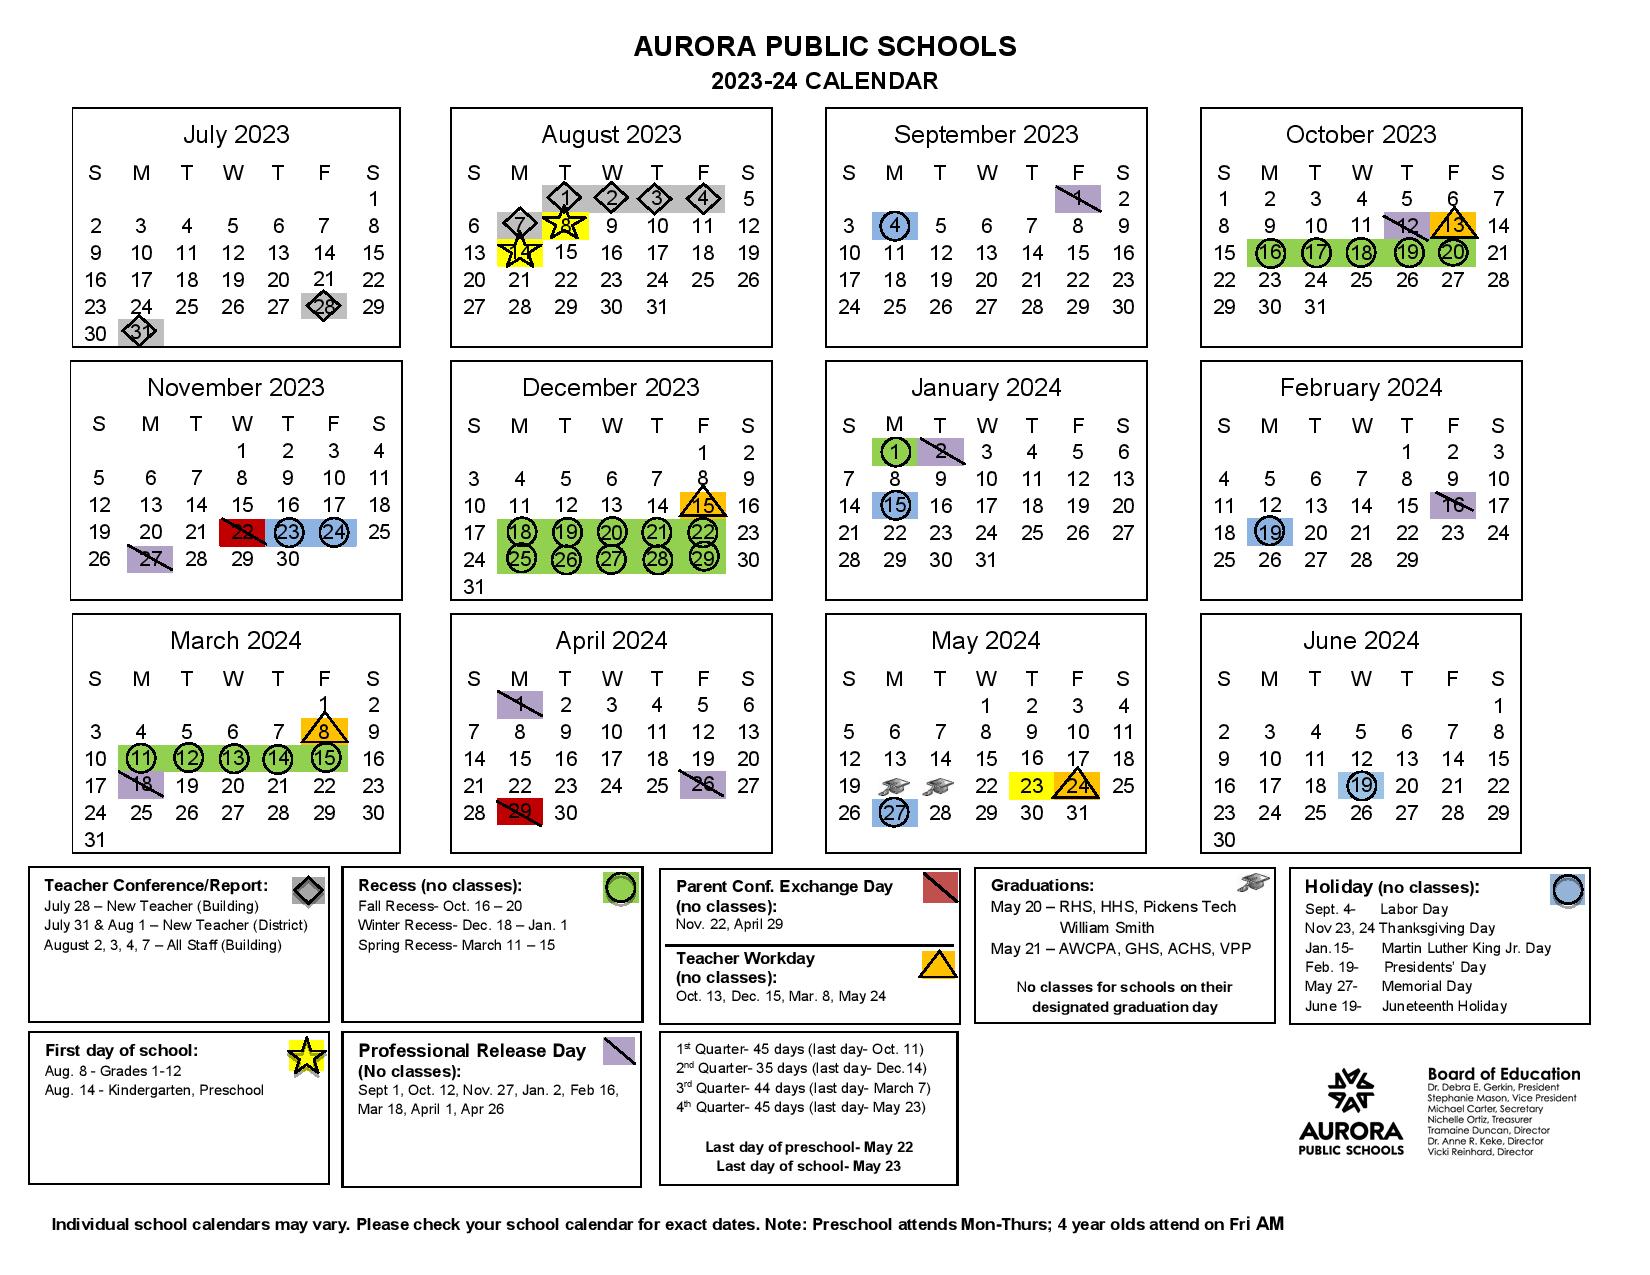 Aurora Public Schools Calendar 2023 2024 (Holiday Breaks)